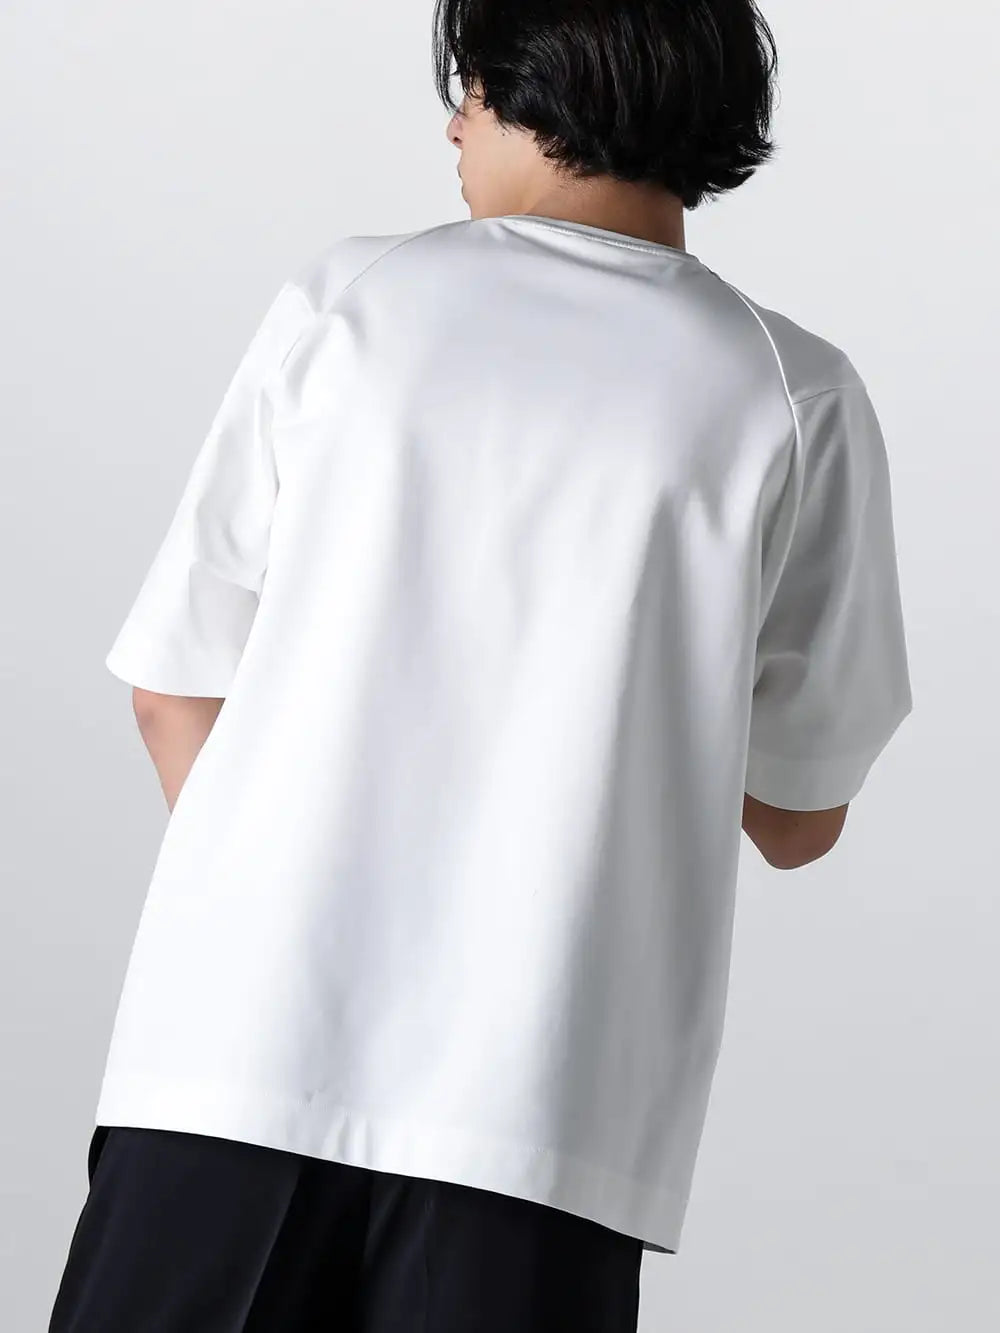 IRENISA 24SS - white - IH-24SS-T006-AG-White-White-cord - short sleeve T-shirt White × White cord 2-003